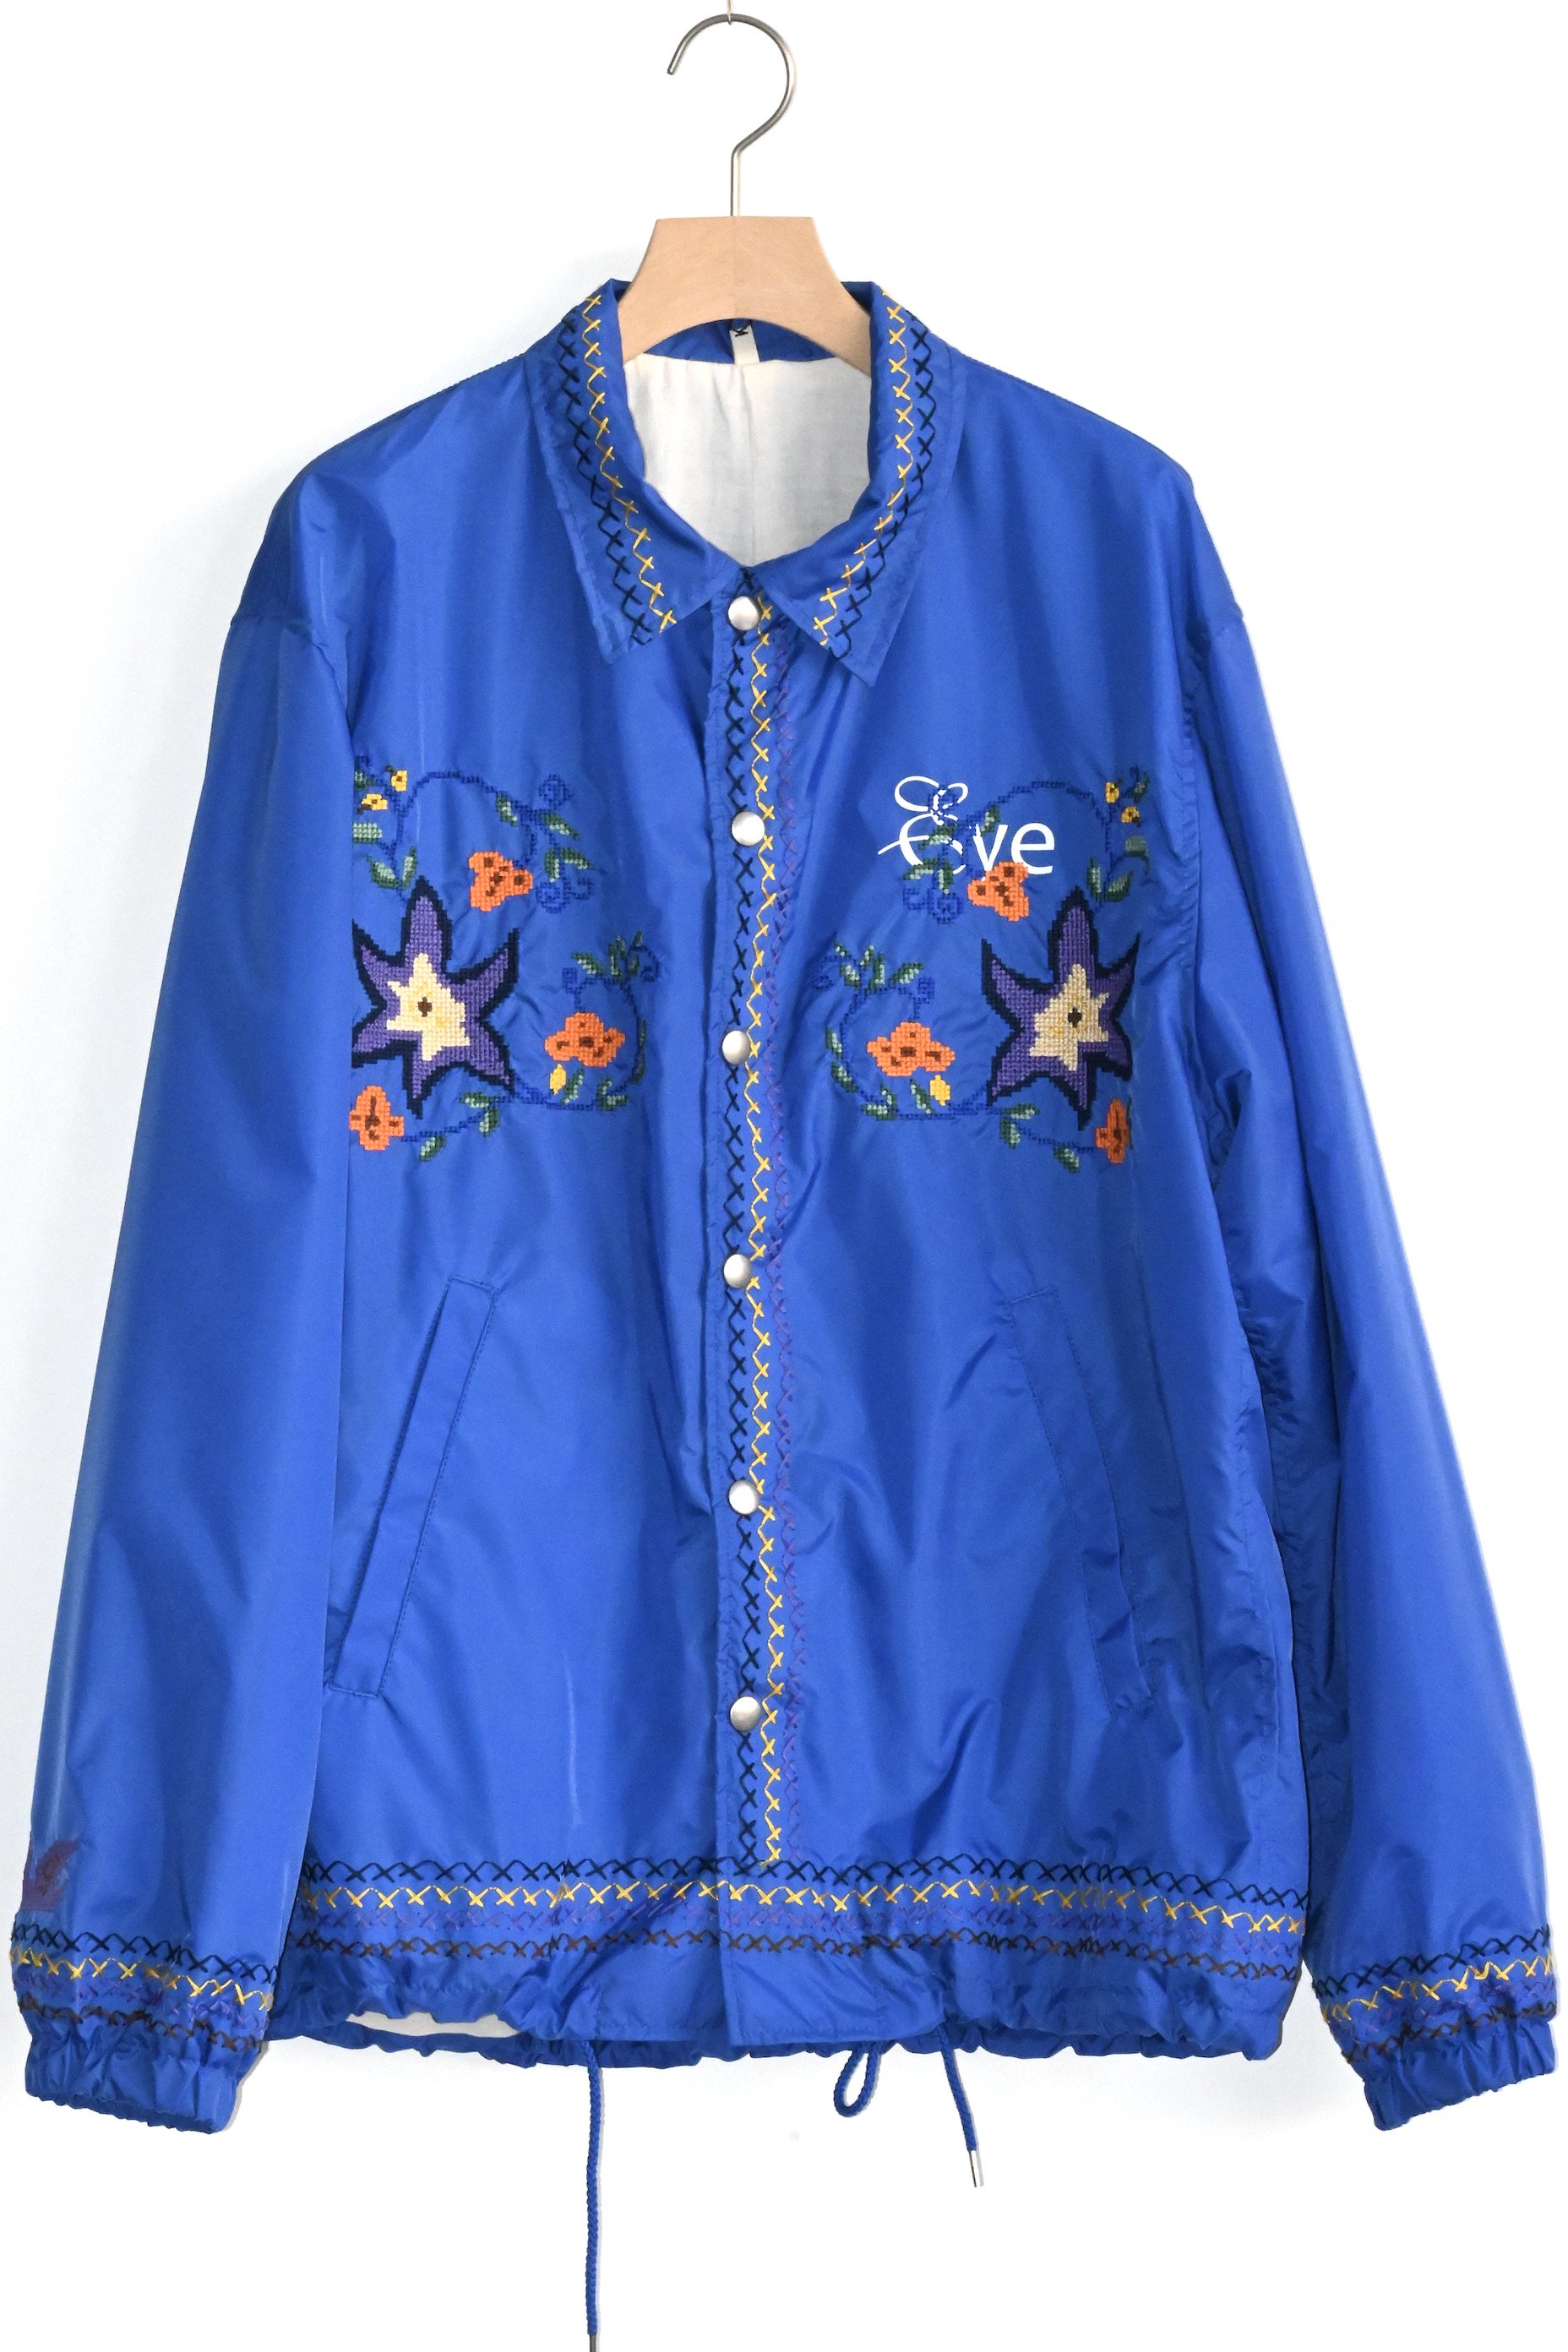 MATEKHOKI Cross-stitch coach jacket